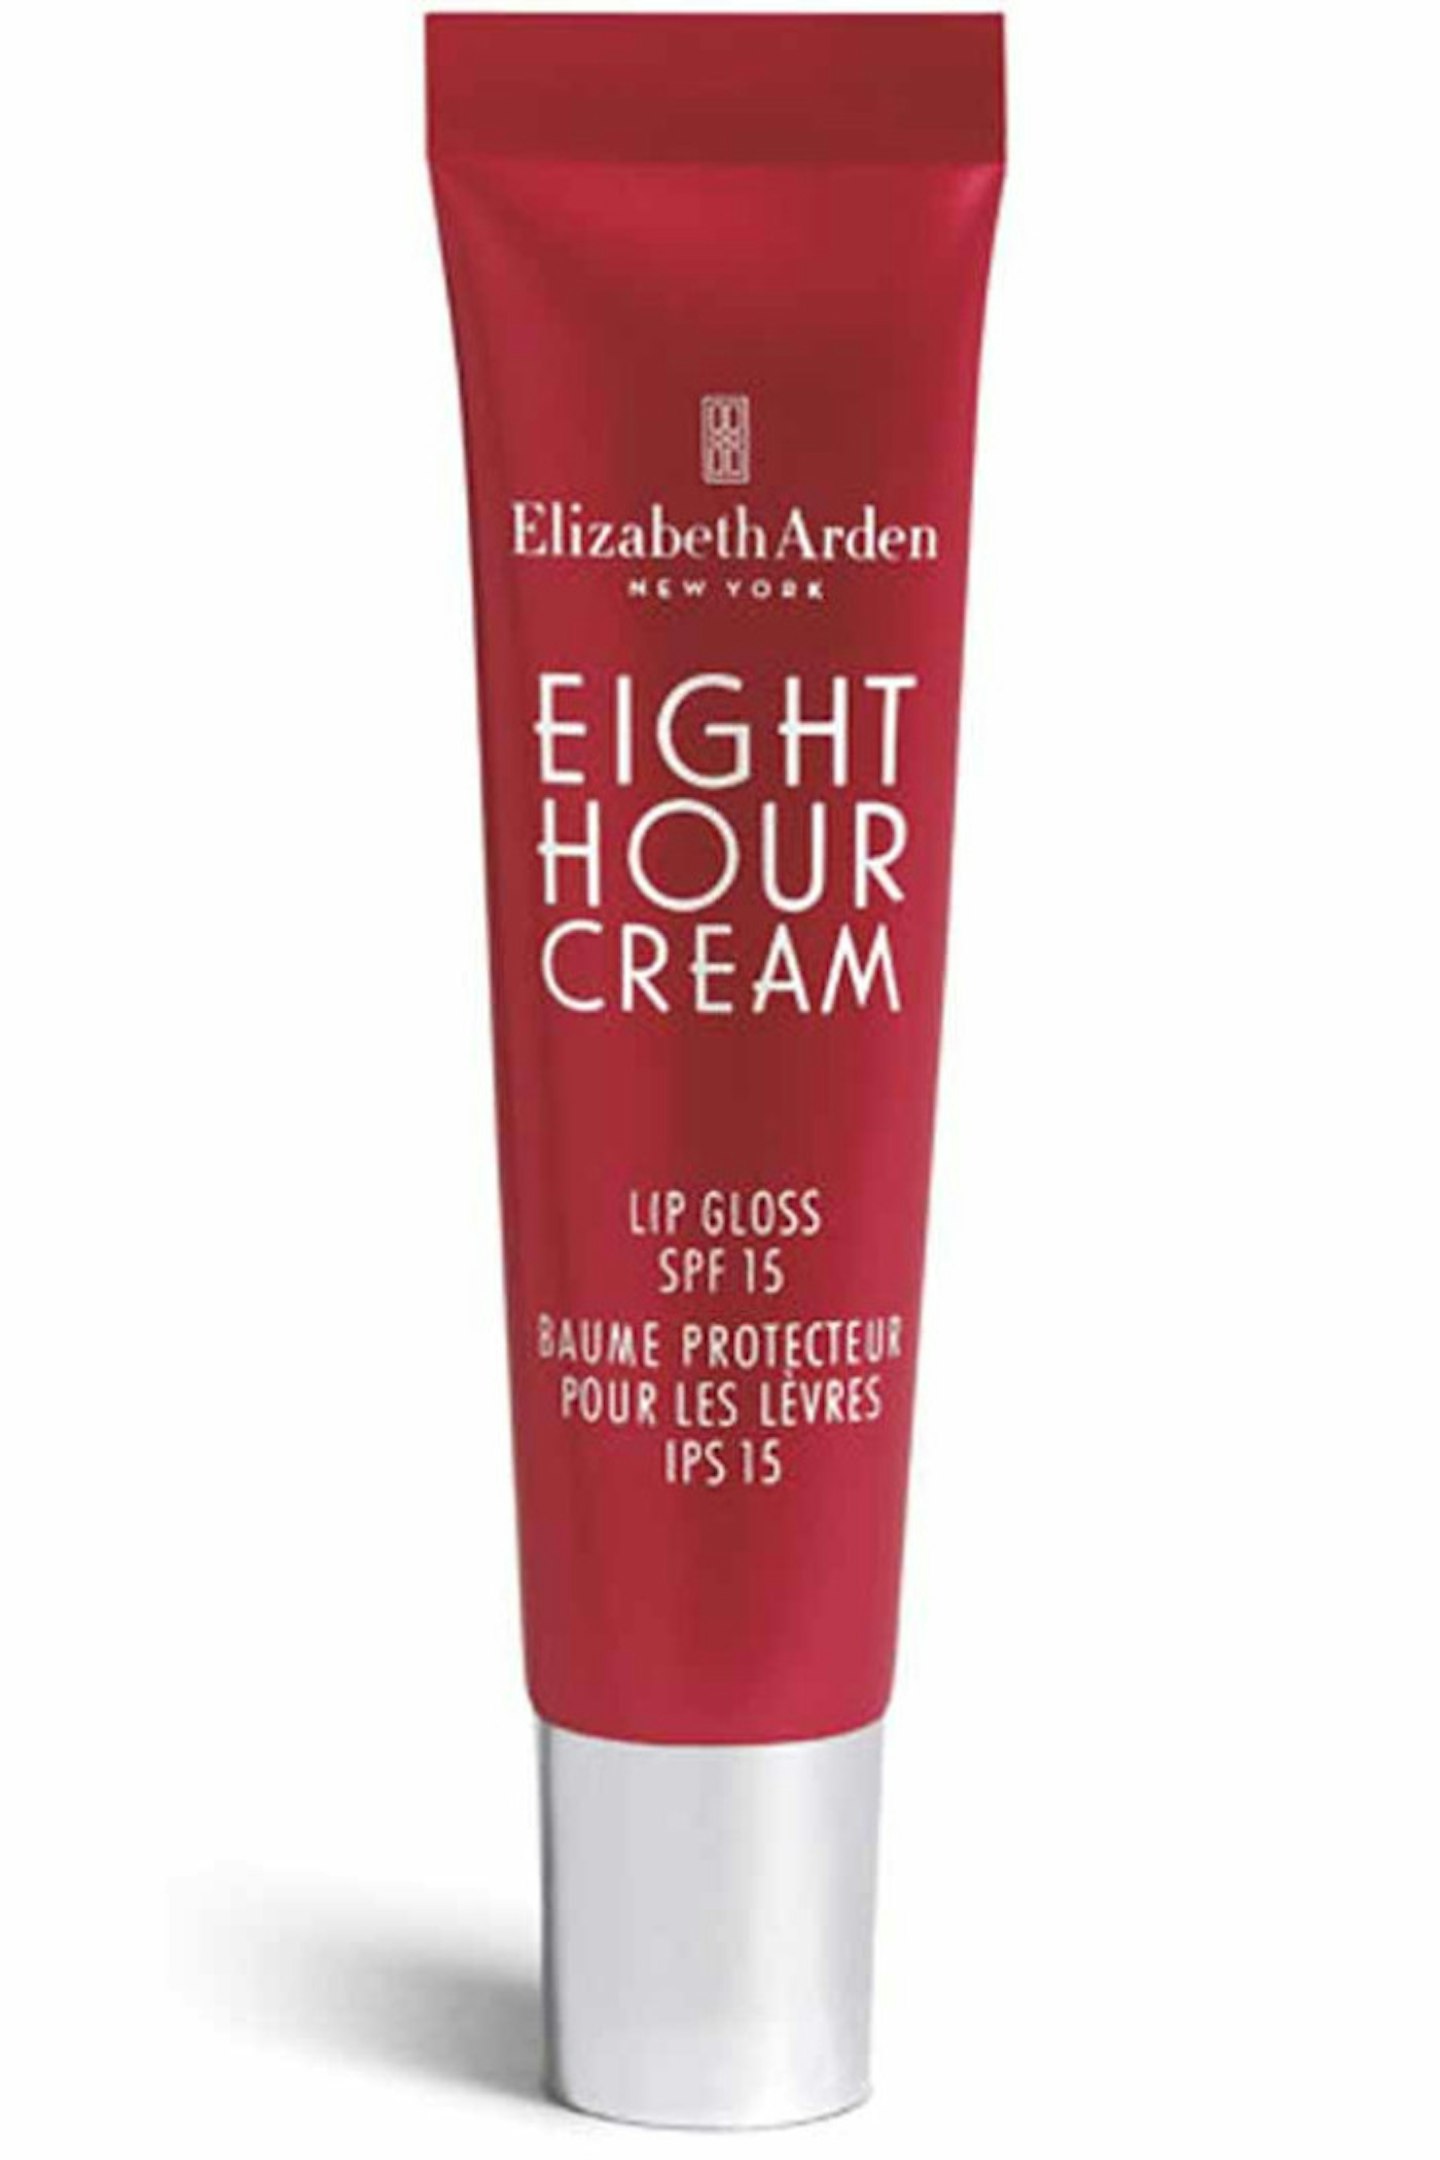 6. Elizabeth Arden Limited Edition New York 8 hour Lip Gloss